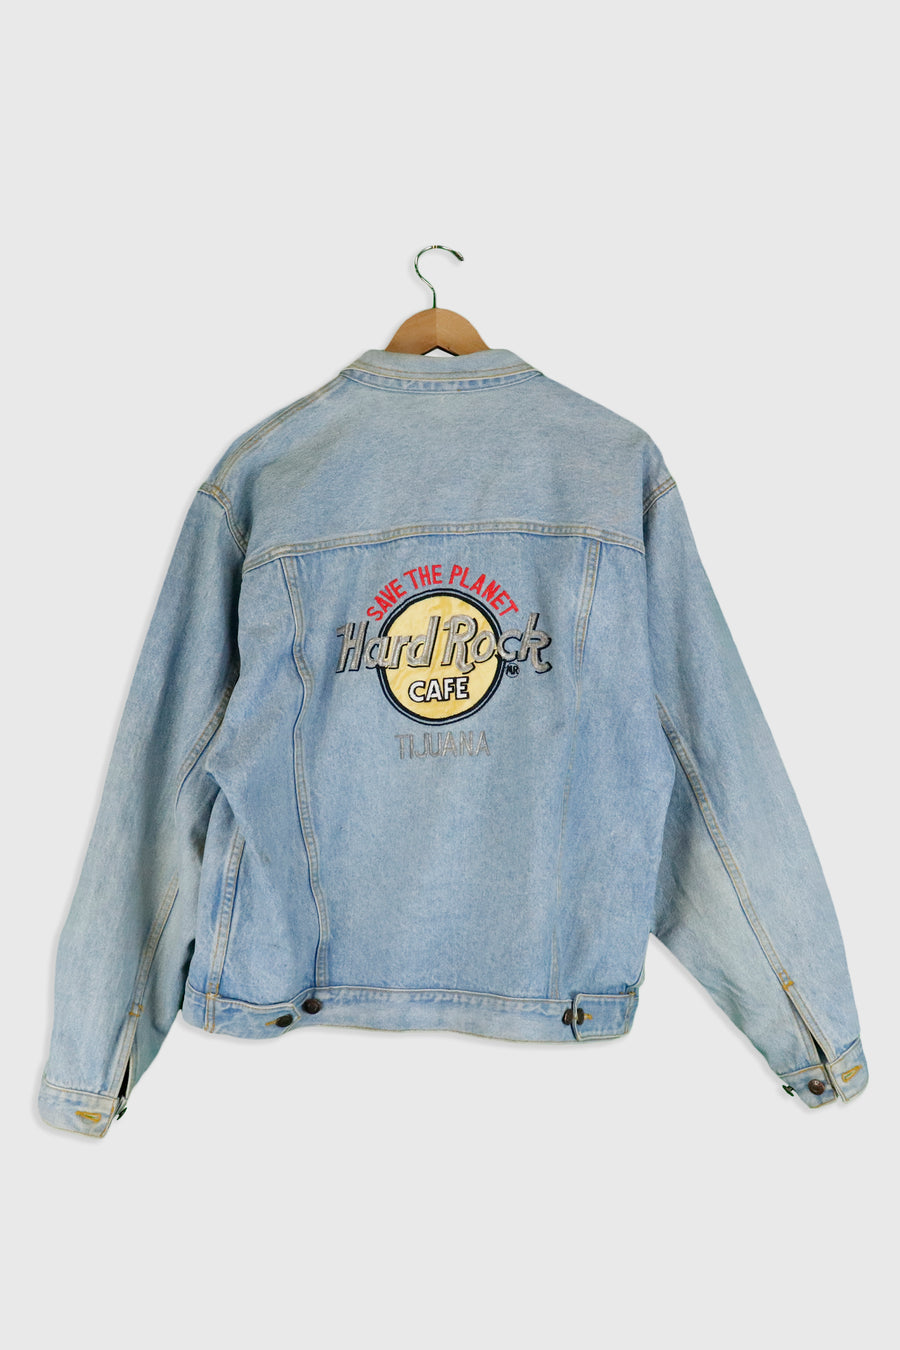 Vintage Hard Rock Cafe Tijuana Denim Jacket Sz L